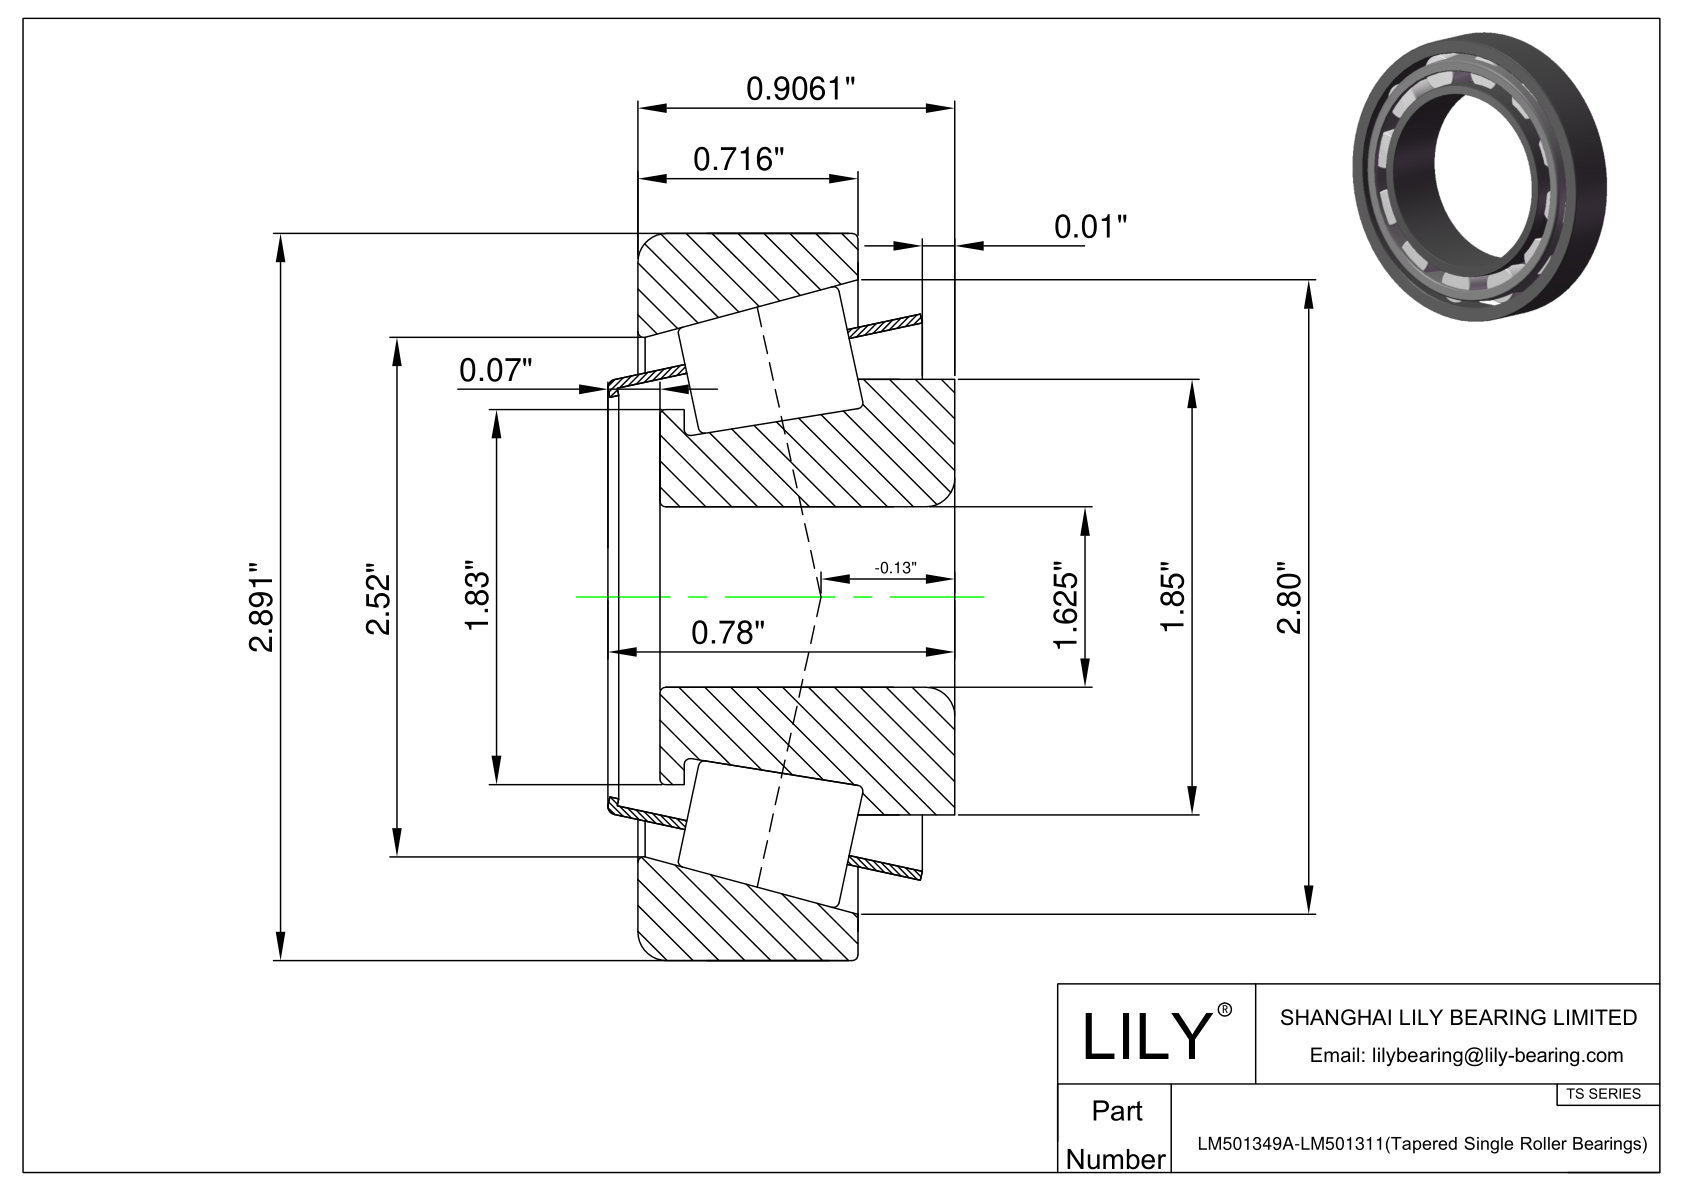 LM501349A-LM501311 TS系列(圆锥单滚子轴承)(英制) CAD图形